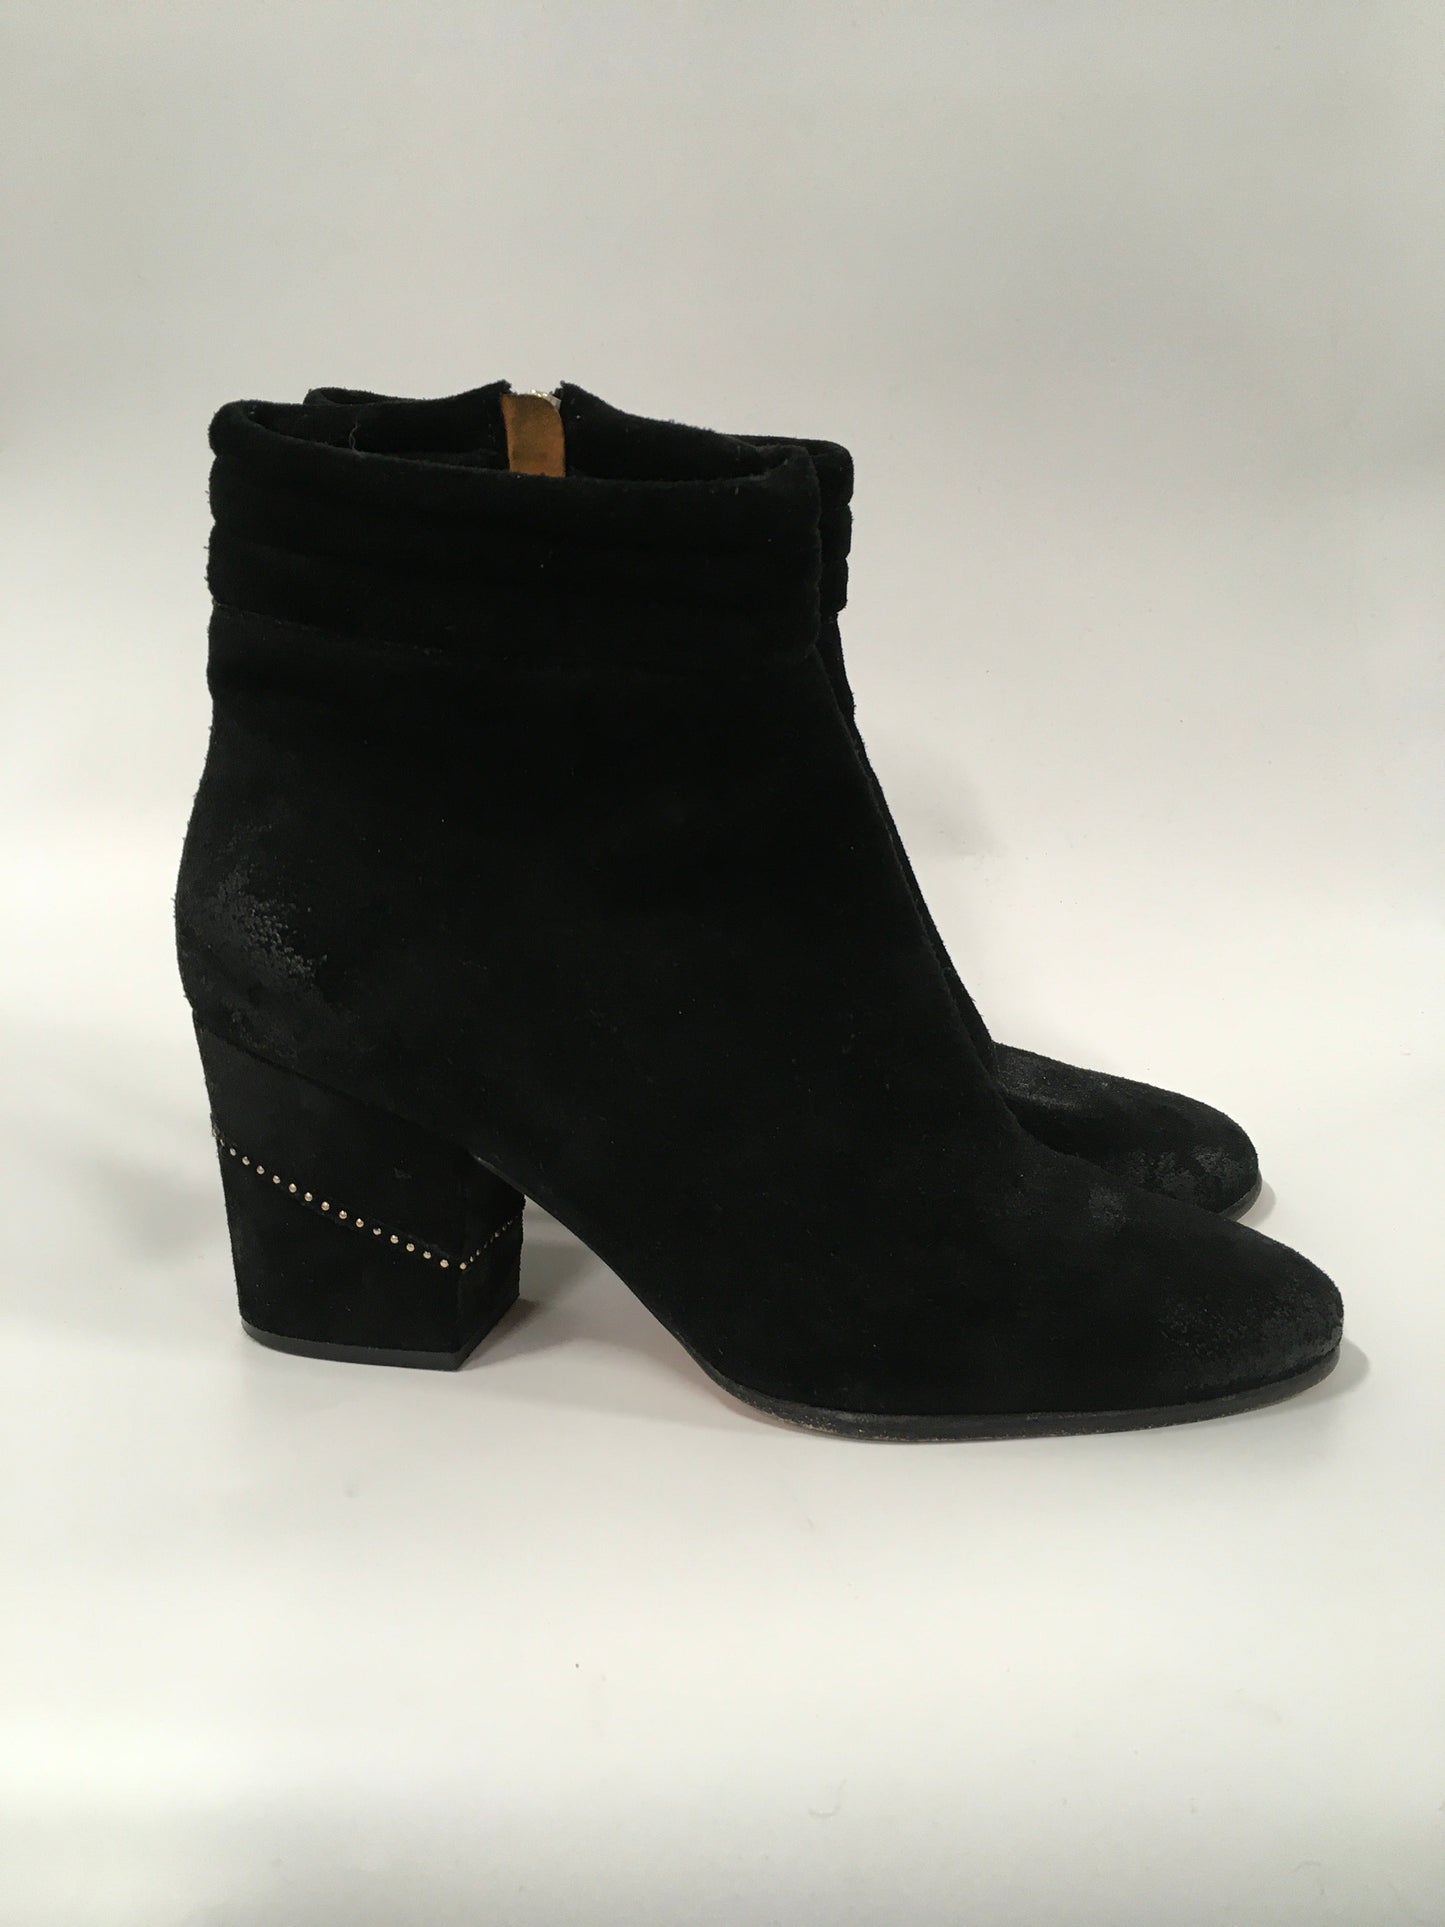 Black Boots Ankle Heels Rebecca Minkoff, Size 9